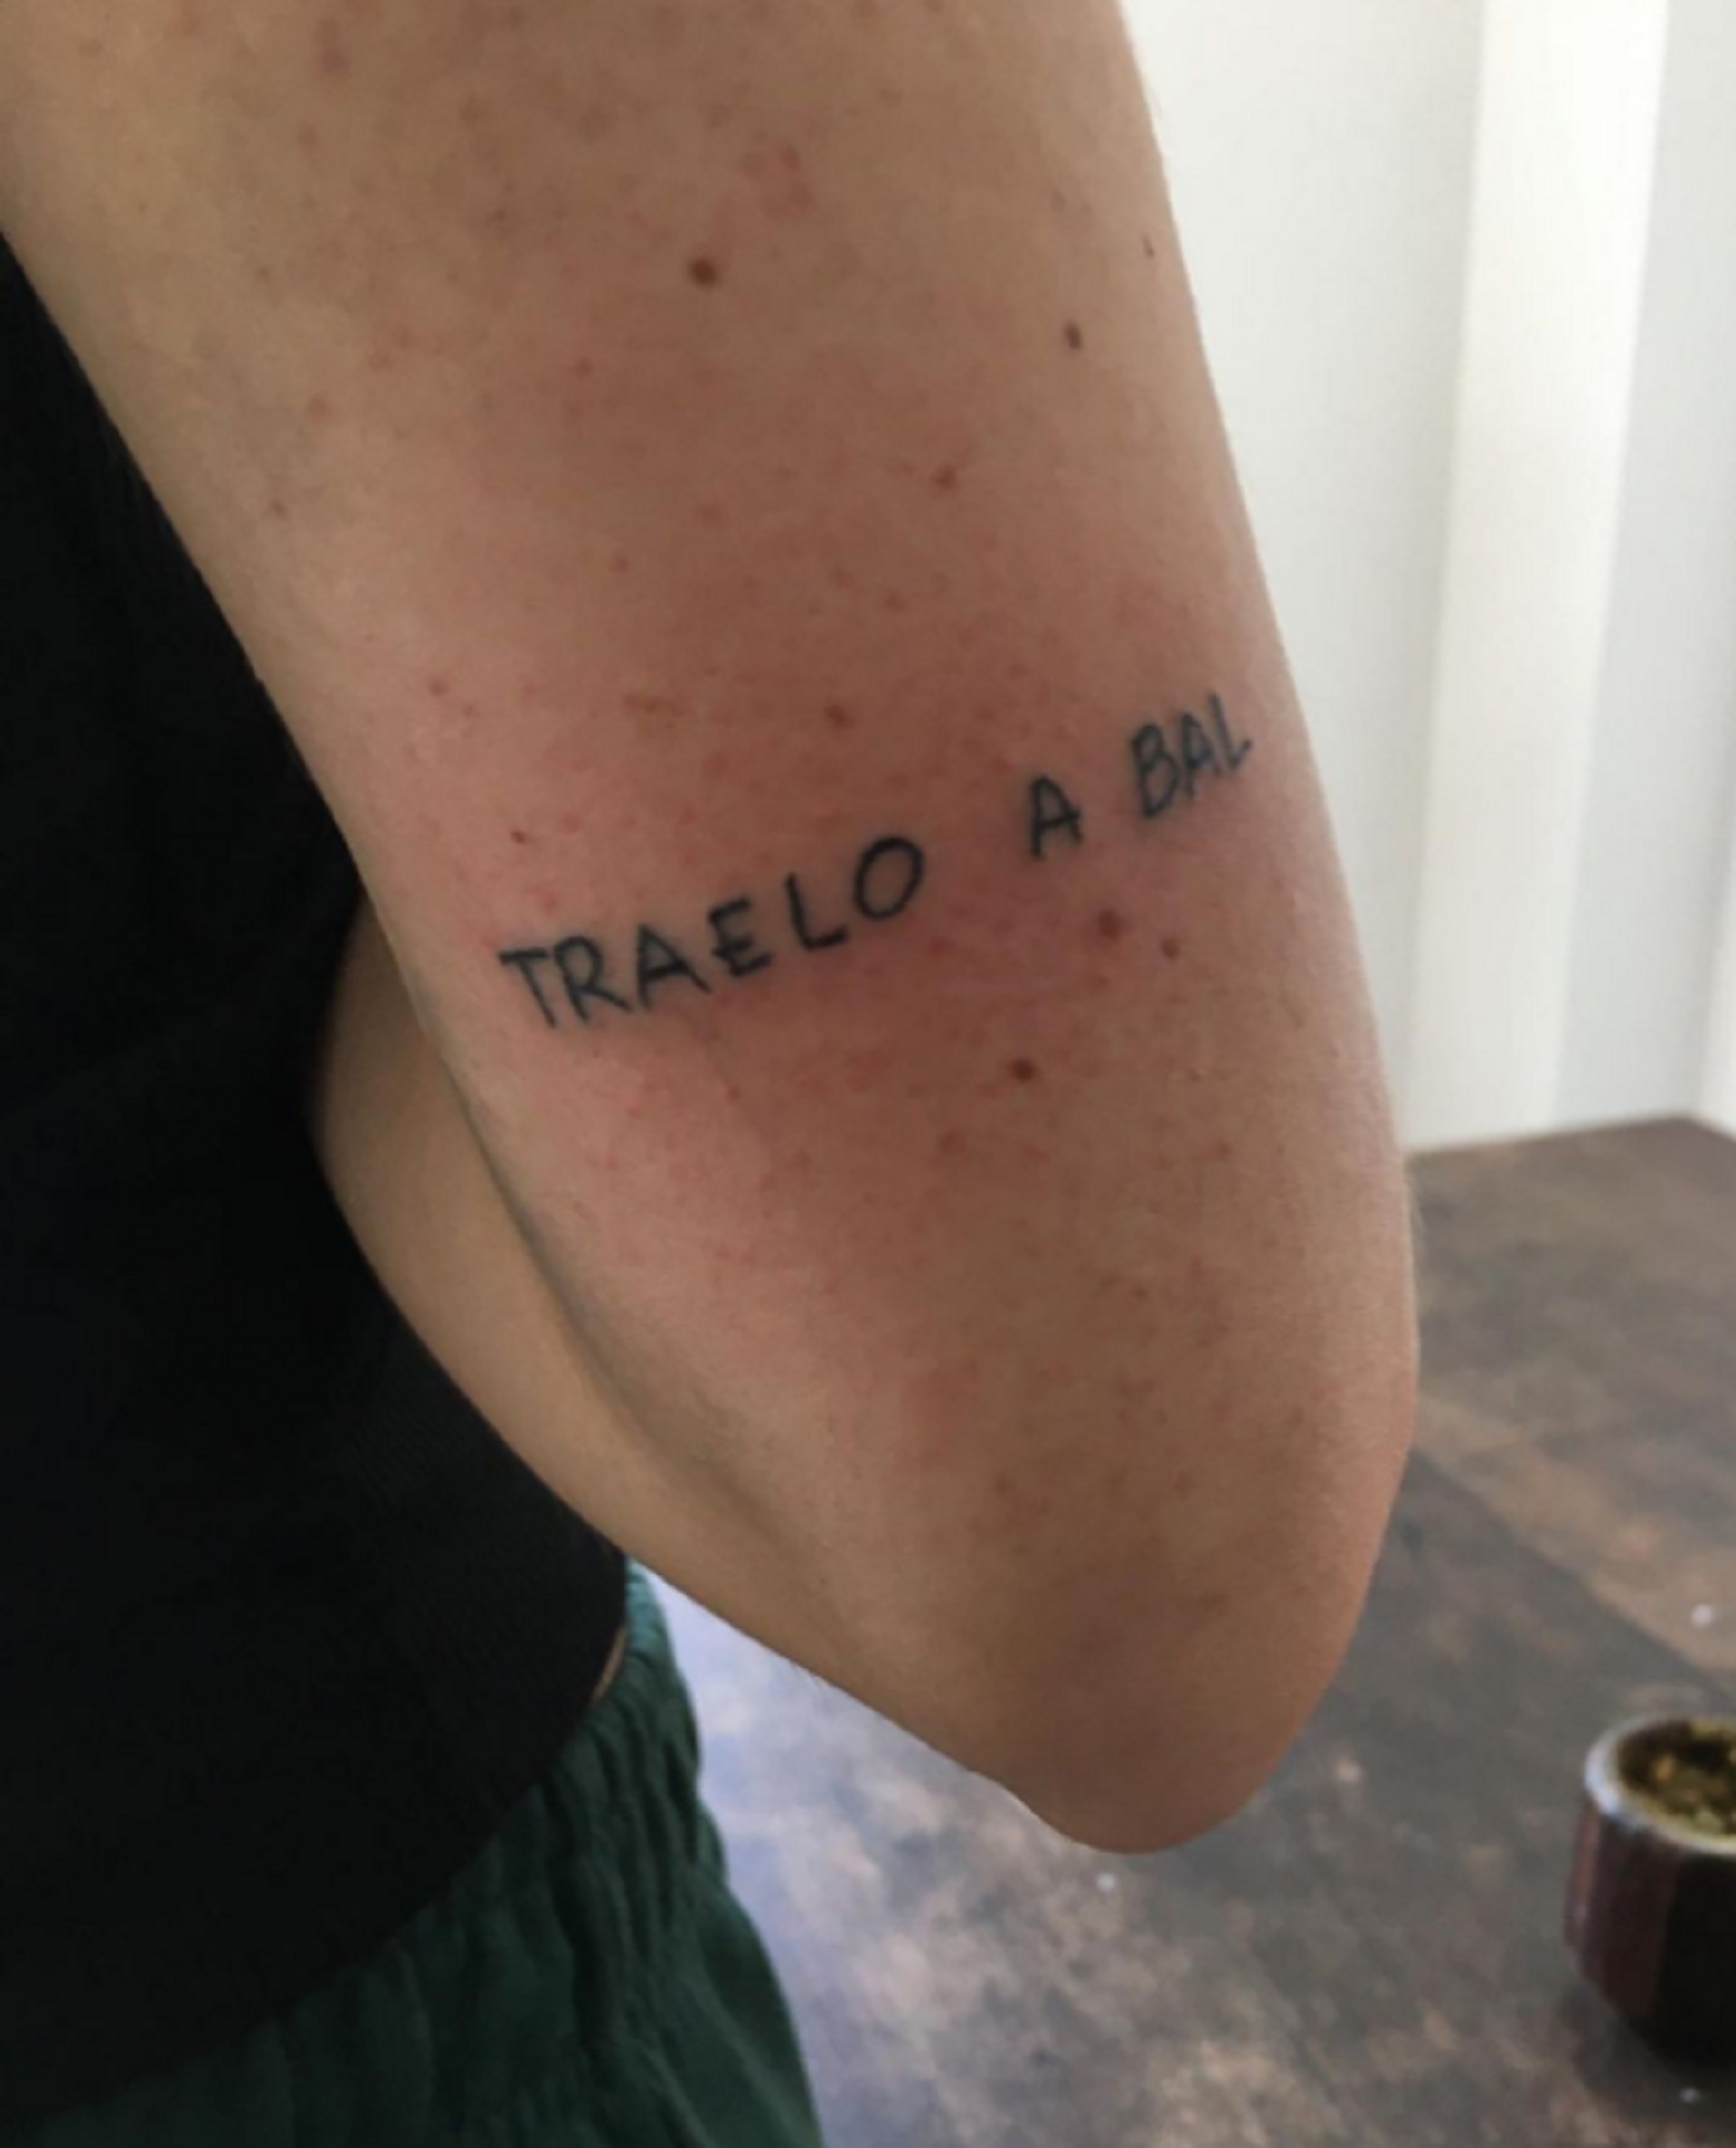 Una mujer se tatuó la frase viral "Traelo a Bal" de Ayelén Paleo